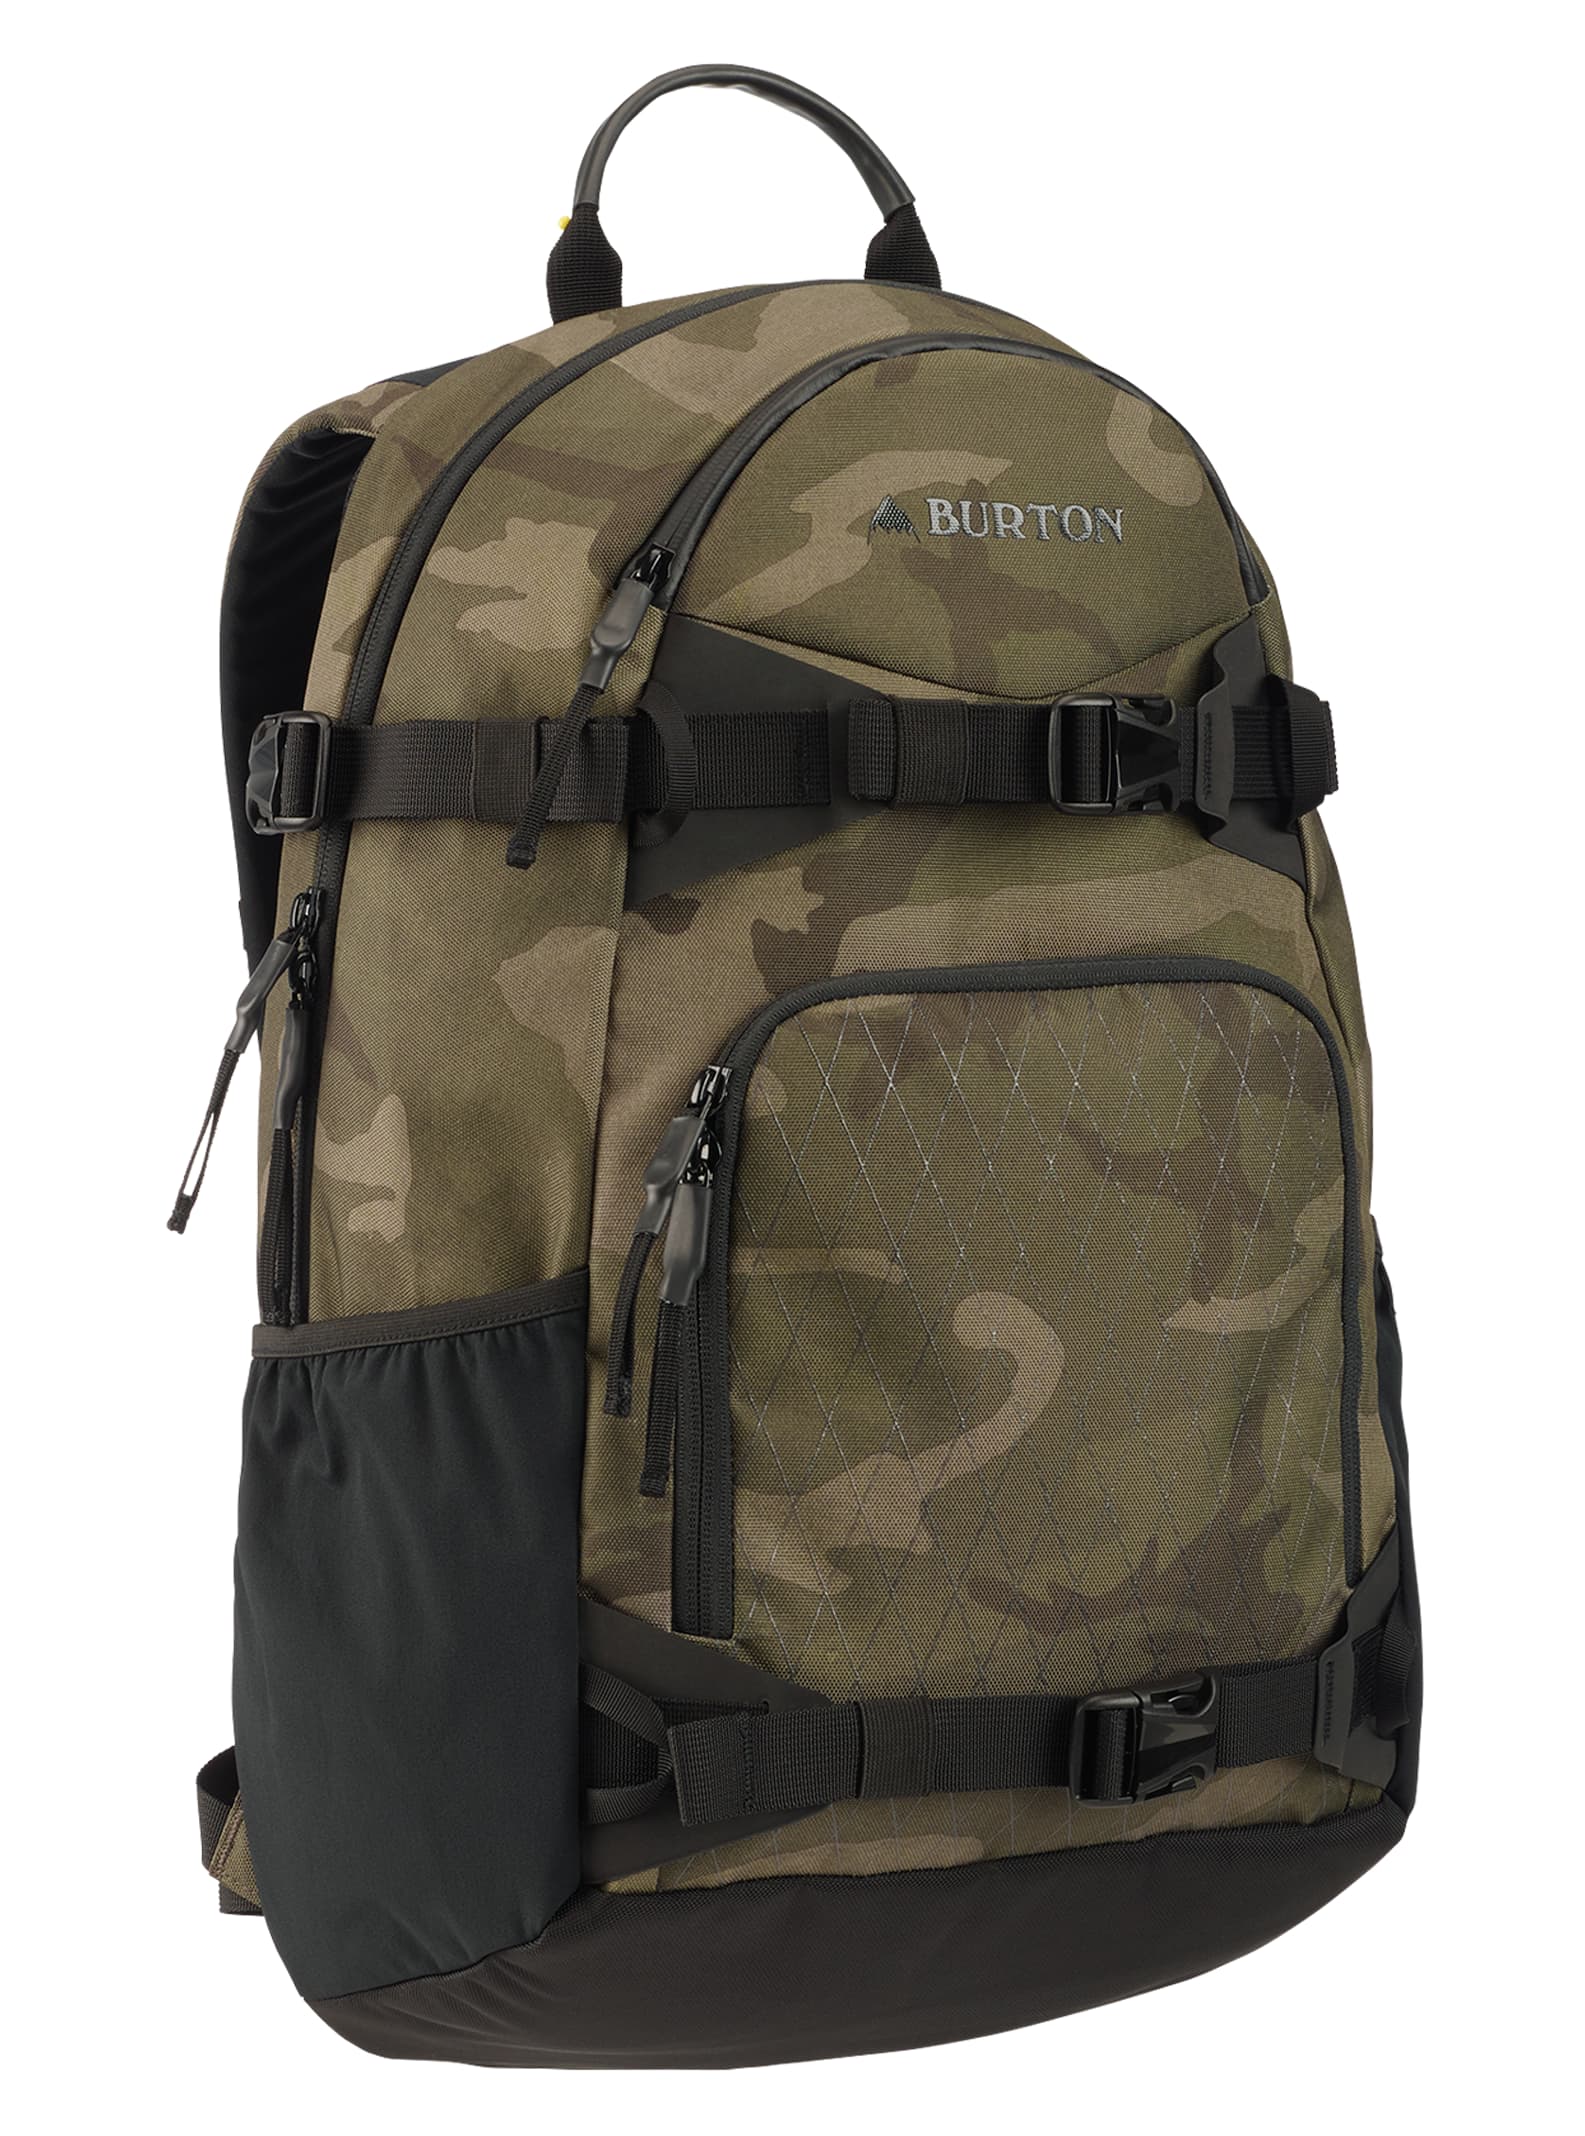 Burton Rider's 25L Backpack | Burton.com Winter 2020 JP